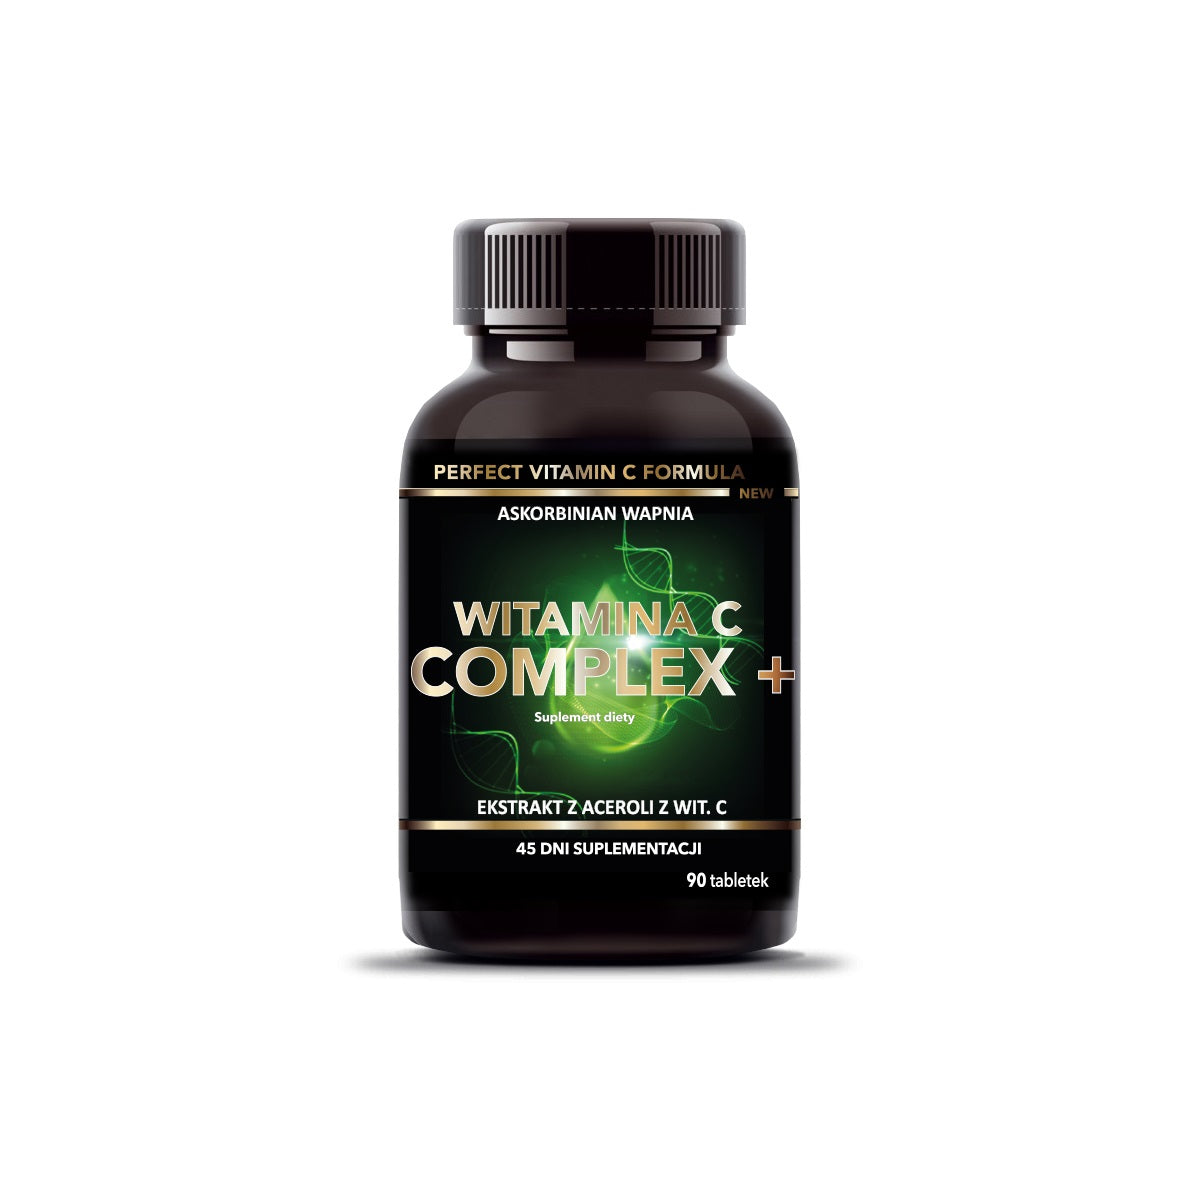 Witamina C Complex acerola + askorbinian wapnia - 90 tabletek - Intenson.pl